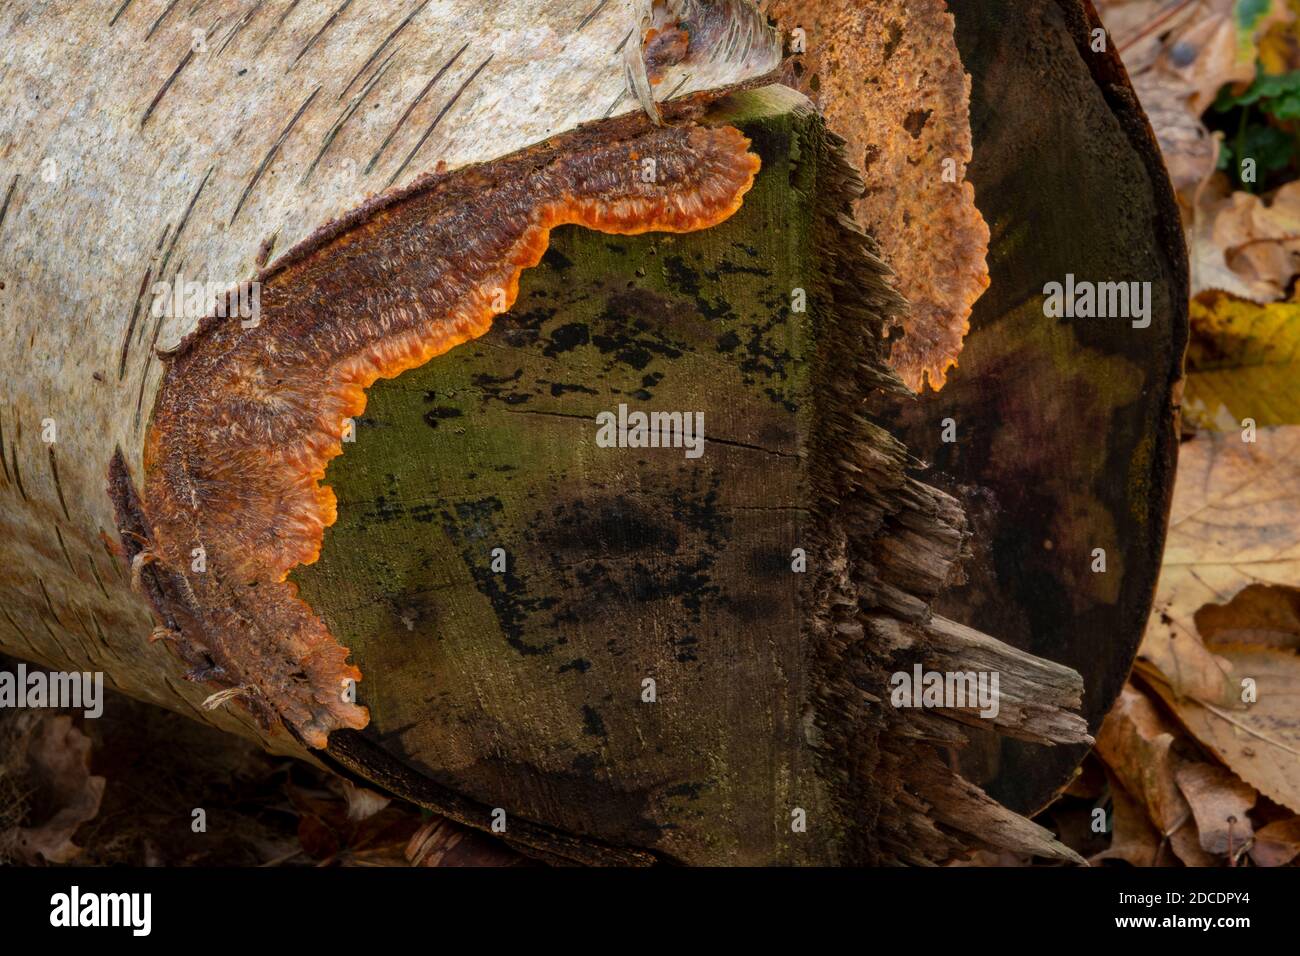 Lichen growing on felled tree Stock Photo